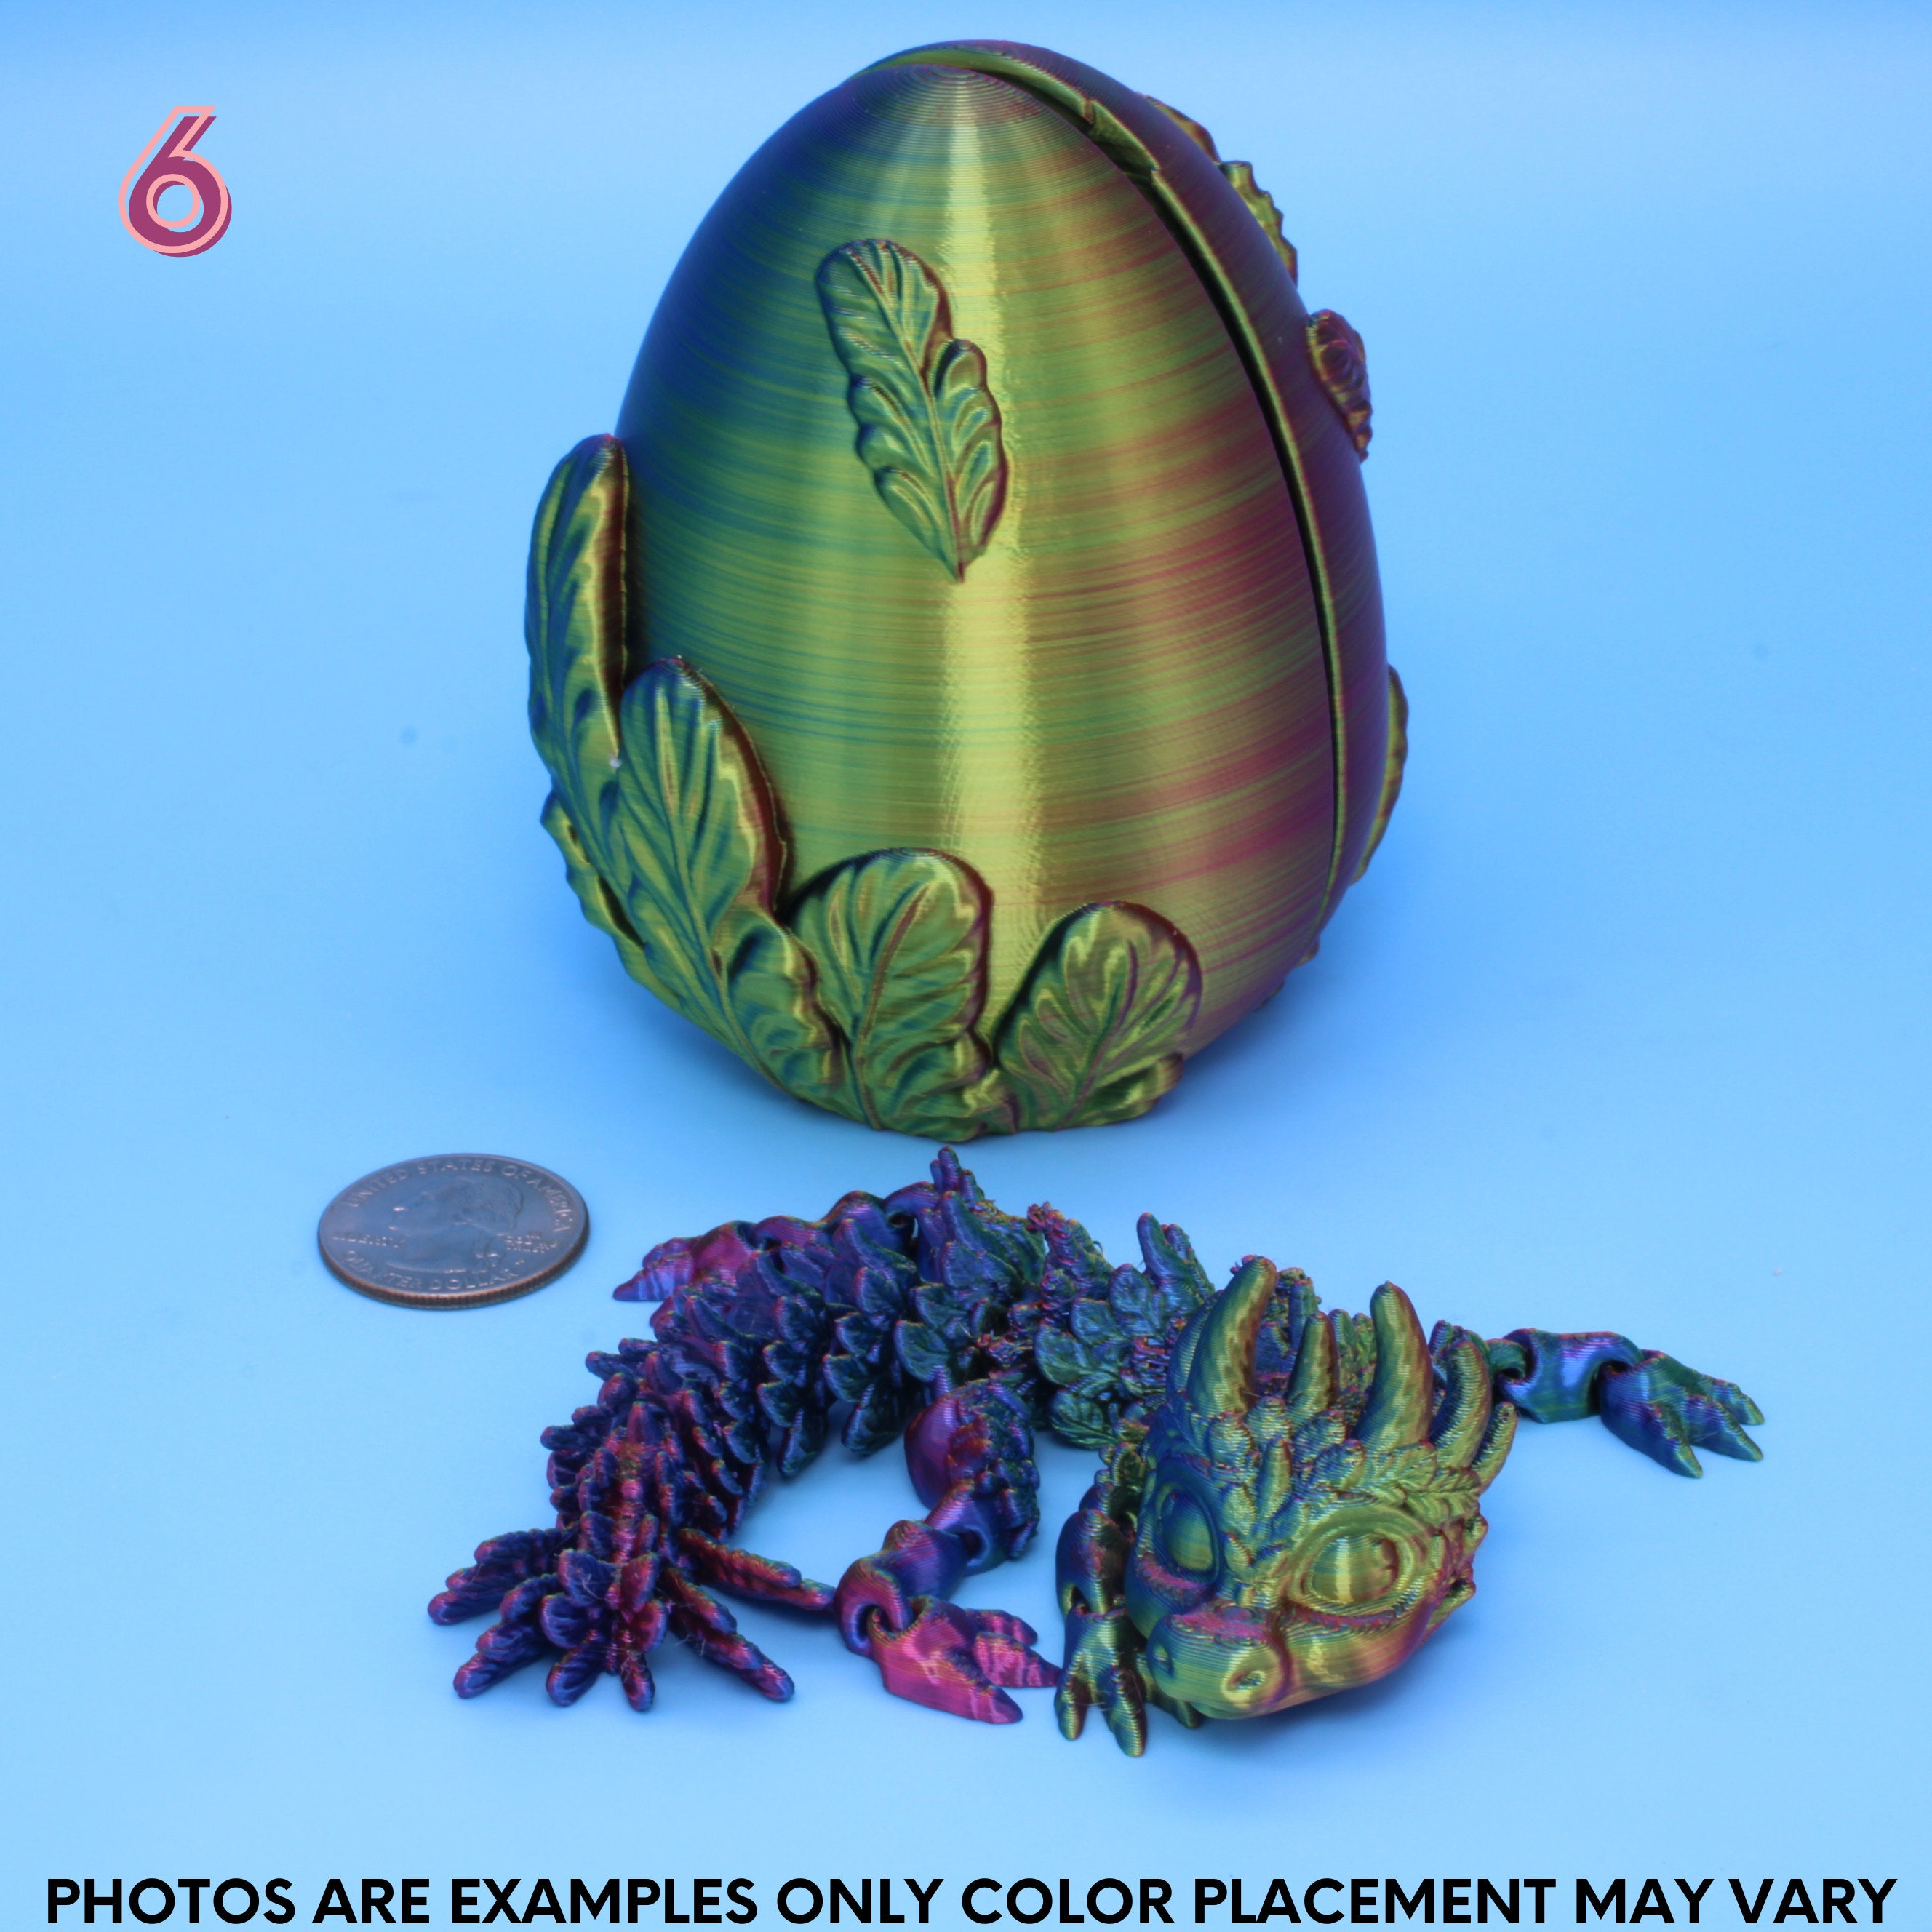 Deyva no wings version and egg Dragon | 3D Printed